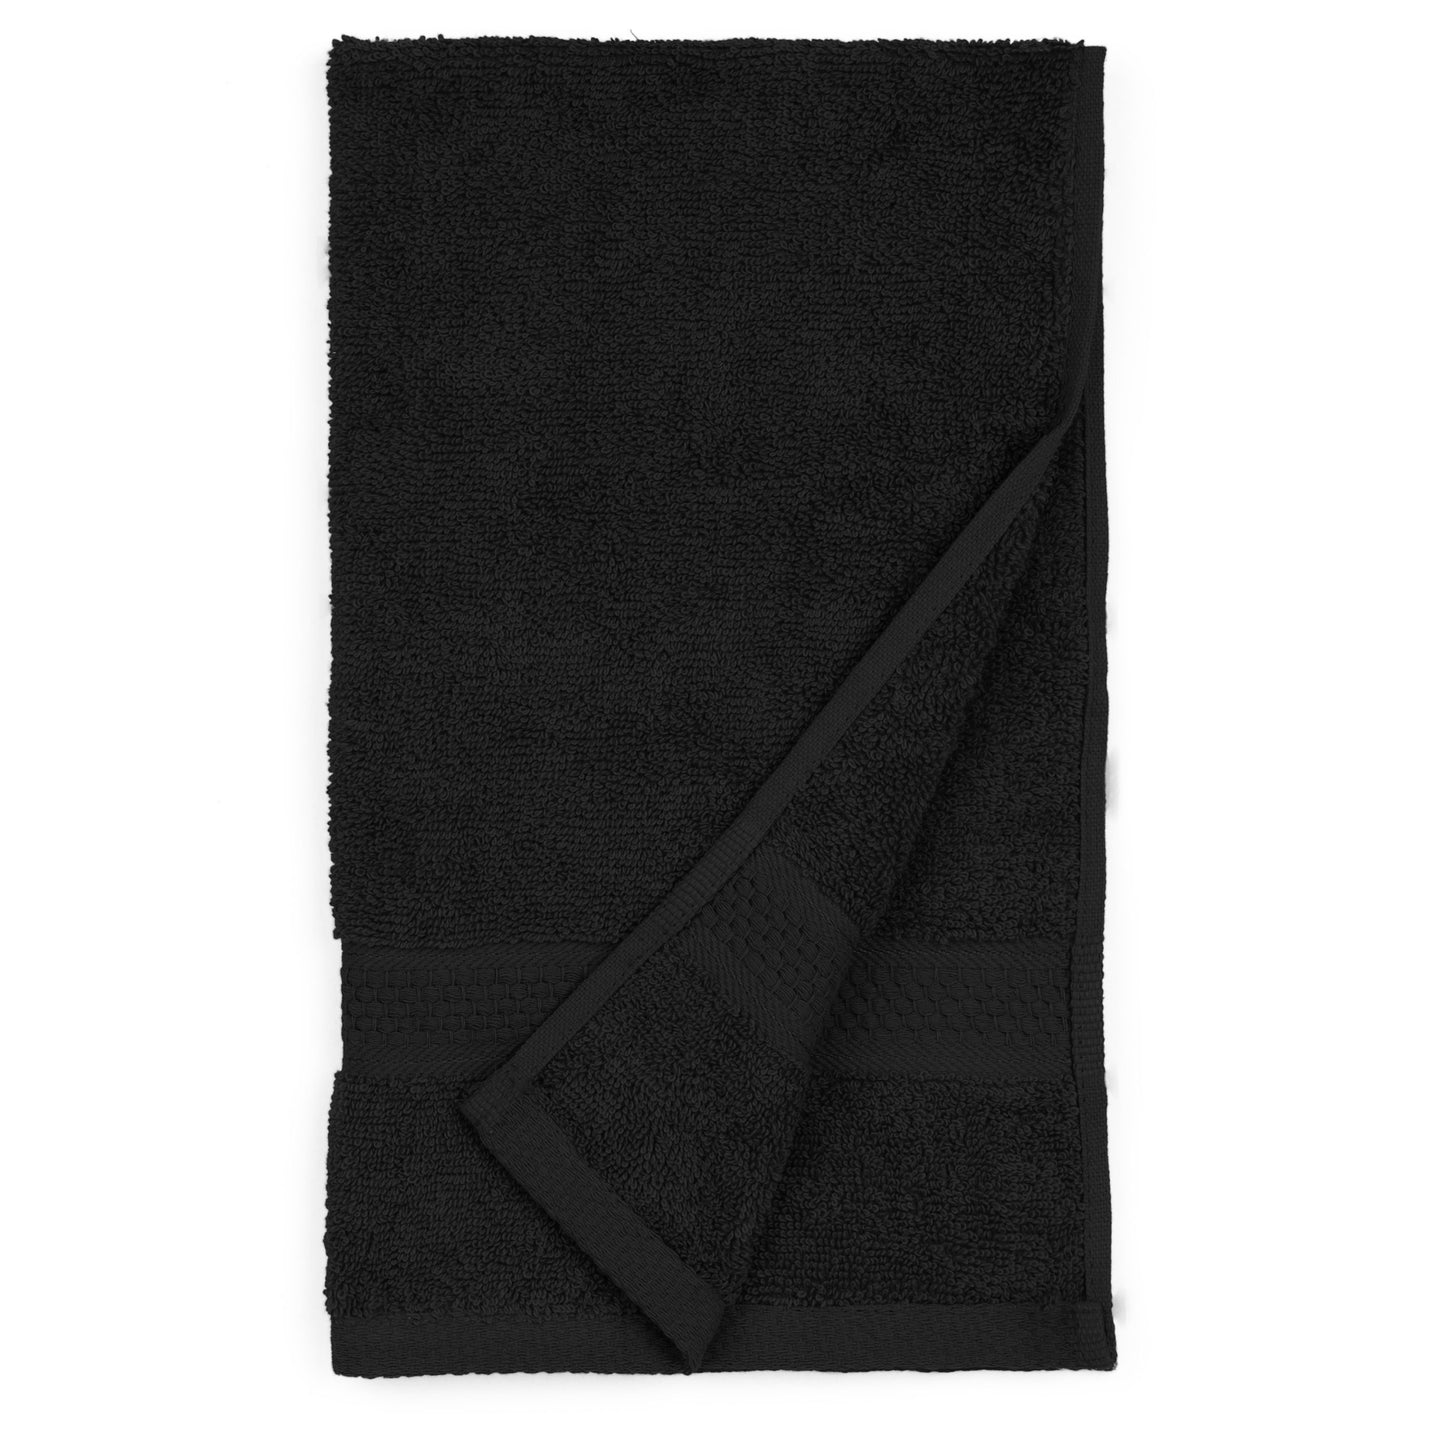 Jumbo Salon Towel, 16x28 inch, Black